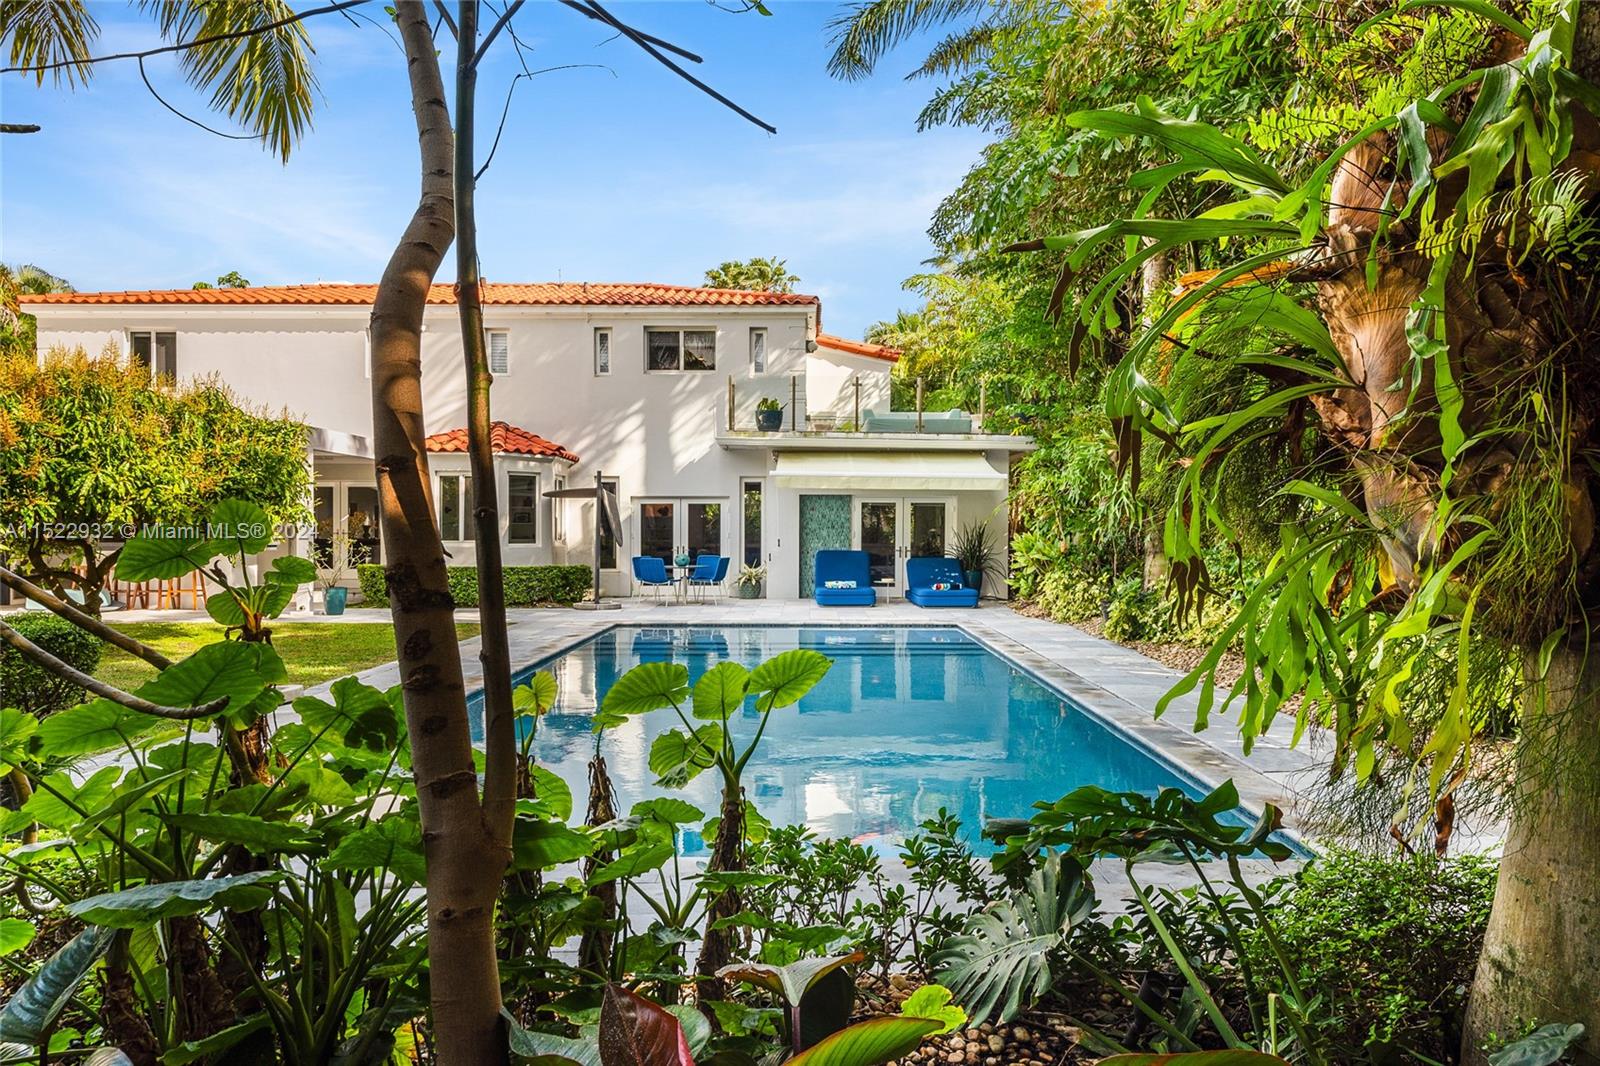 Property for Sale at 2550 Flamingo Dr, Miami Beach, Miami-Dade County, Florida - Bedrooms: 4 
Bathrooms: 5  - $4,950,000